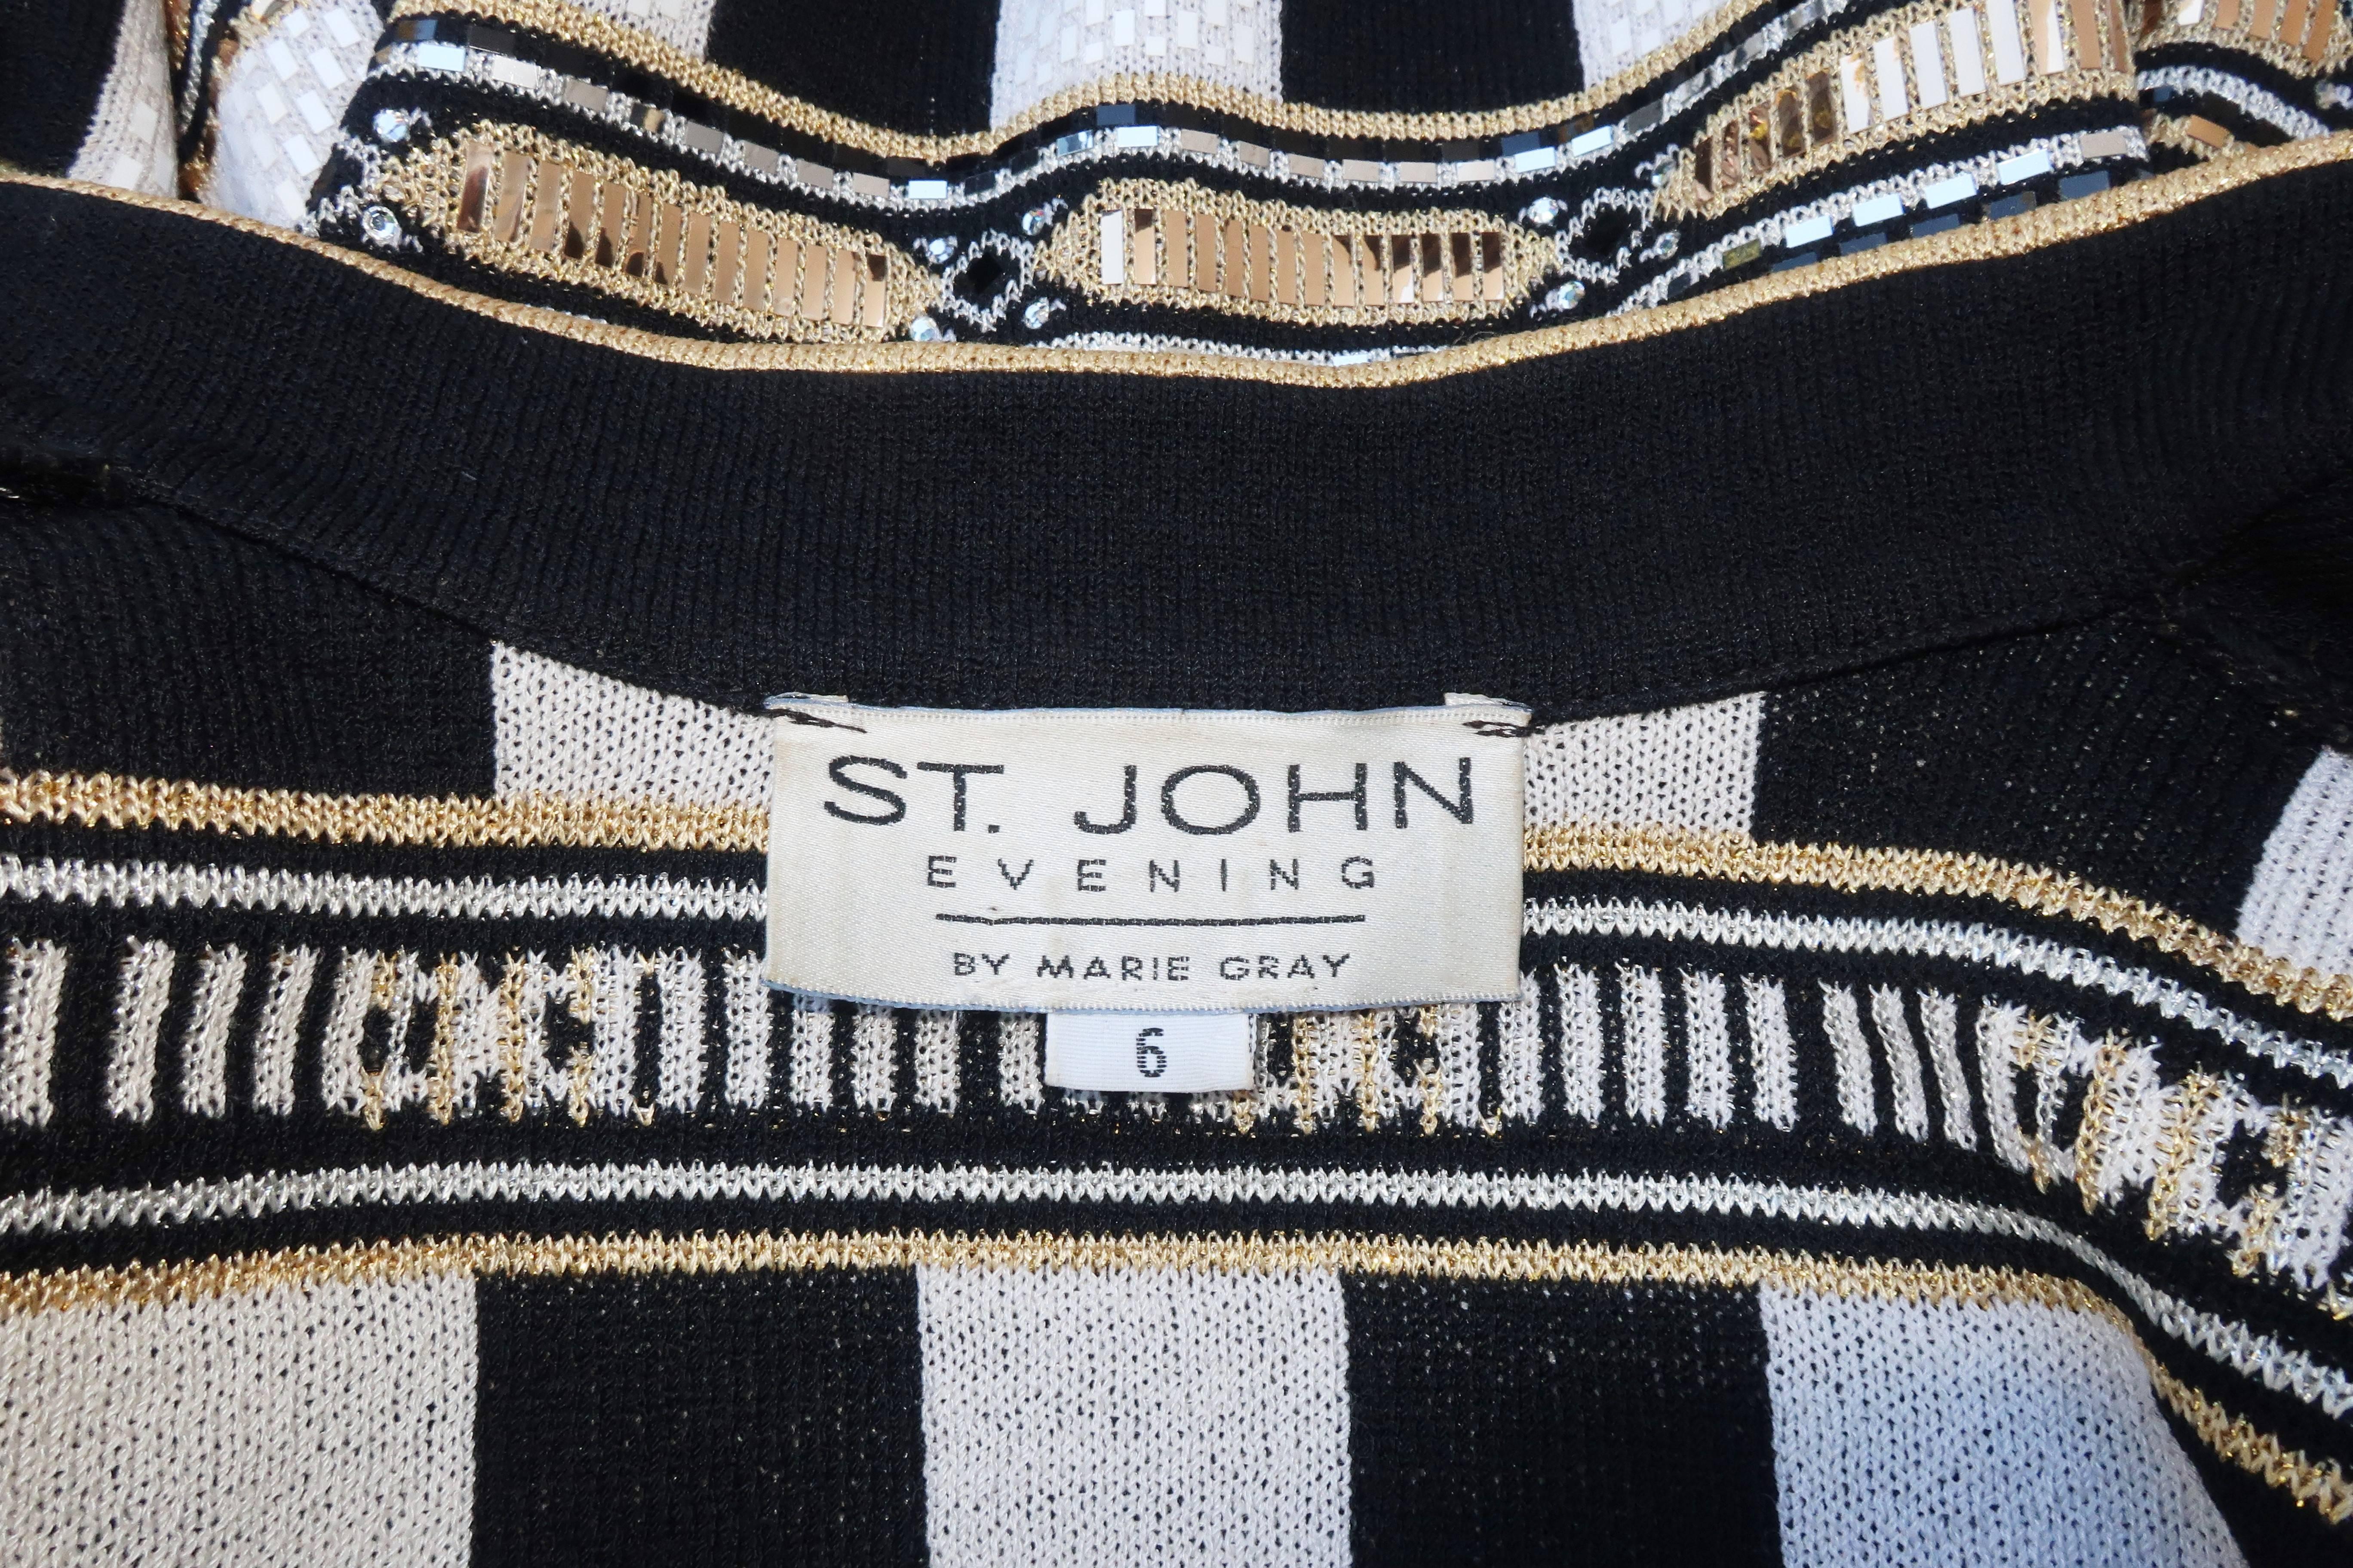 C.1990 St. John Evening Mirrored Metallic Knit Cafe Racer Jacket 5